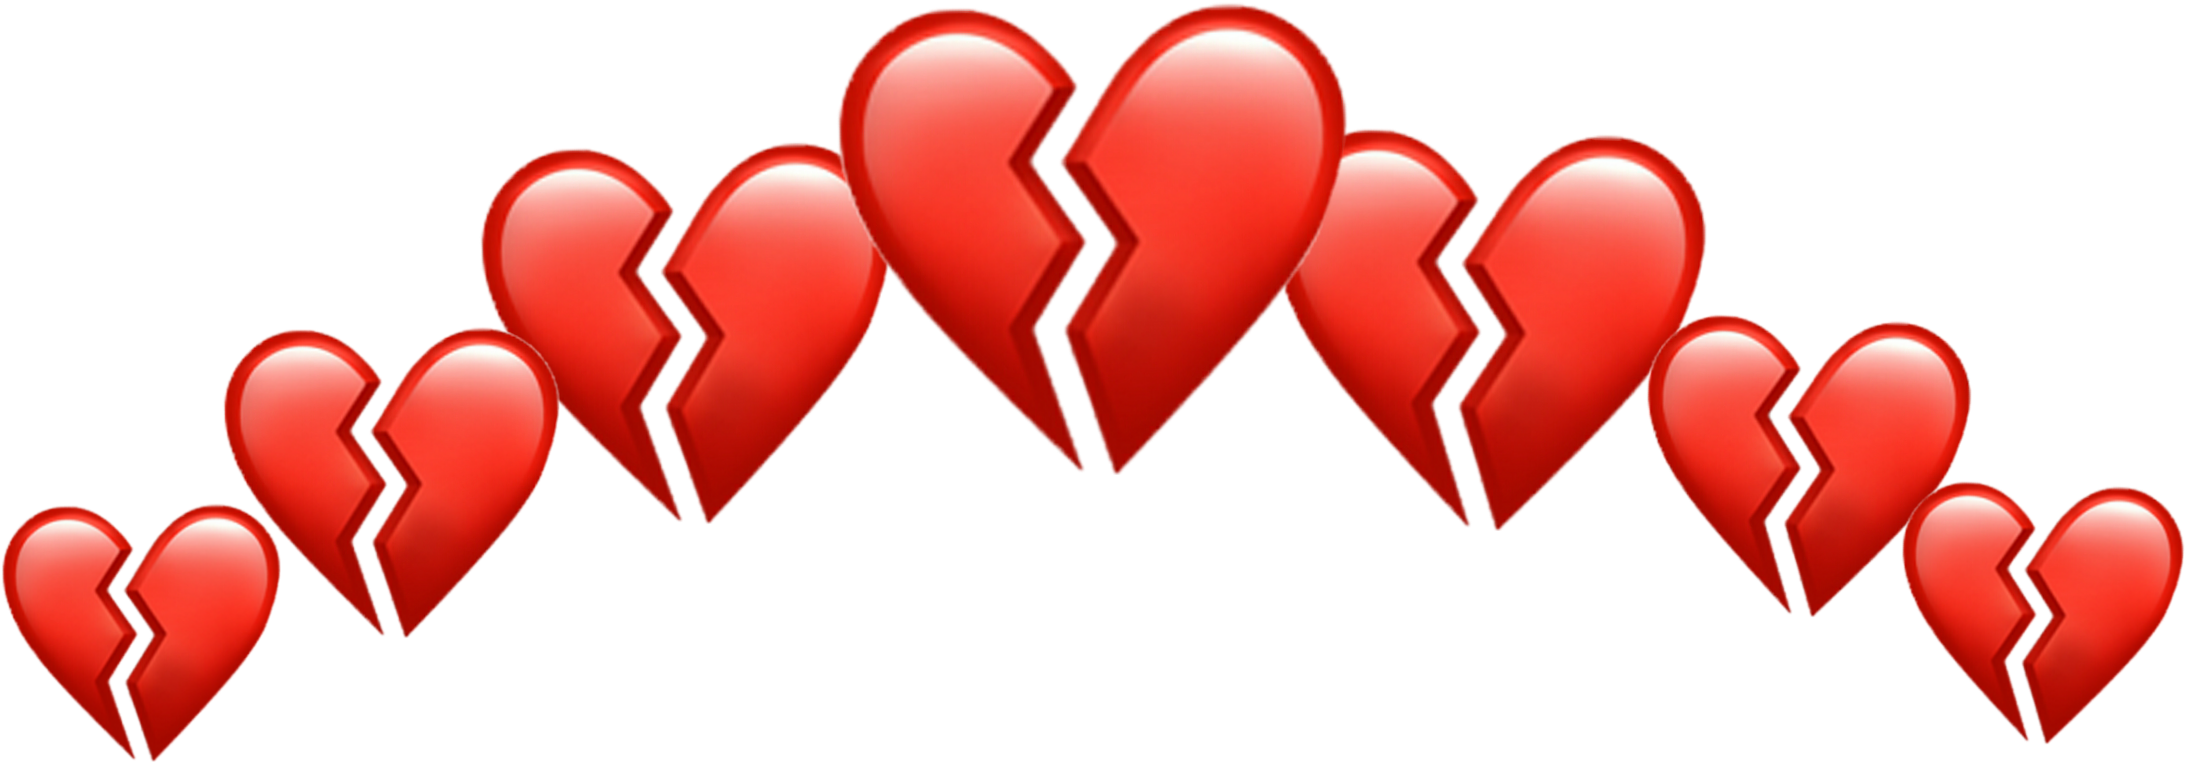 Broken Brokenheart Heart Hearts Crown Tumblr Red Heartr.